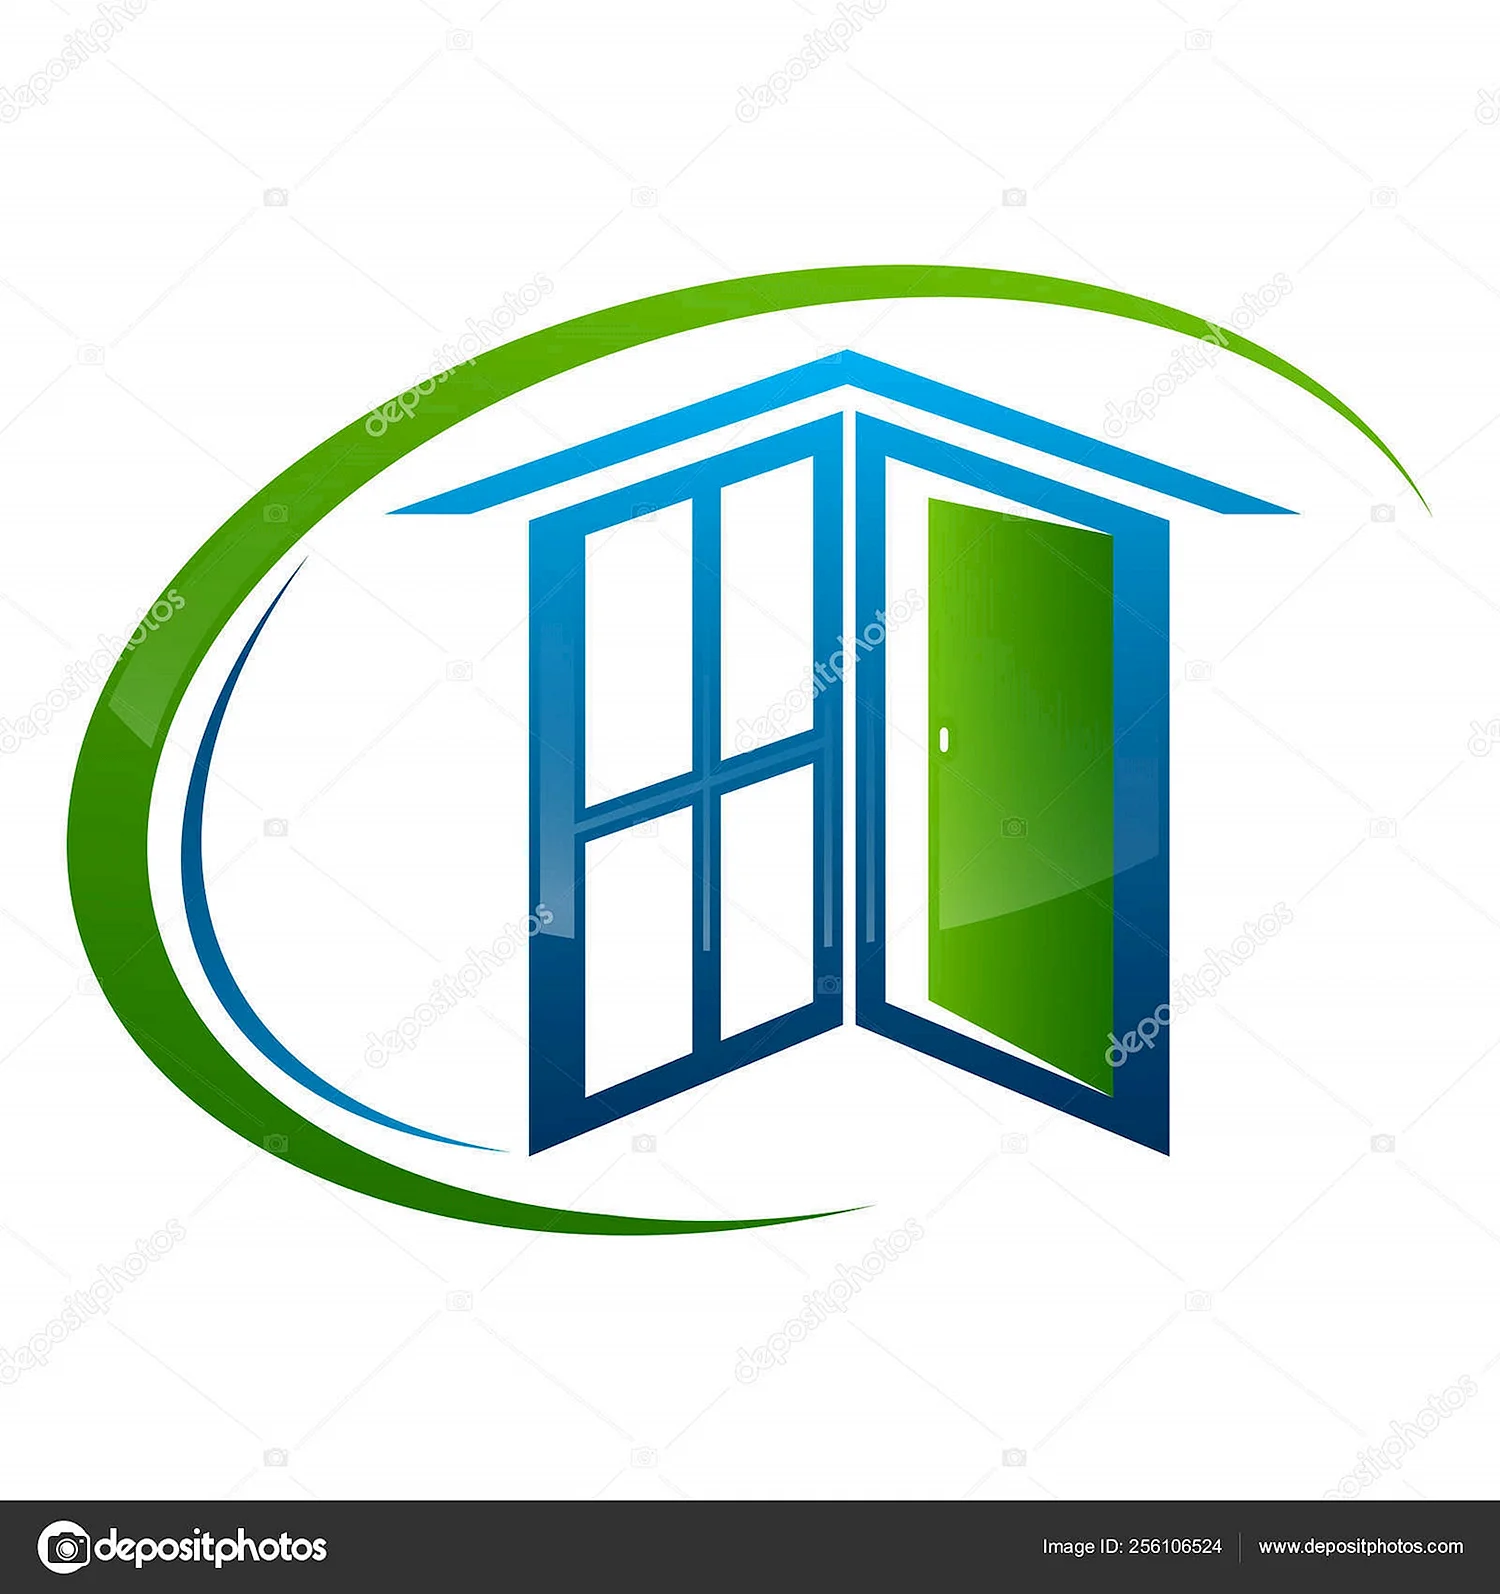 Логотип окна двери